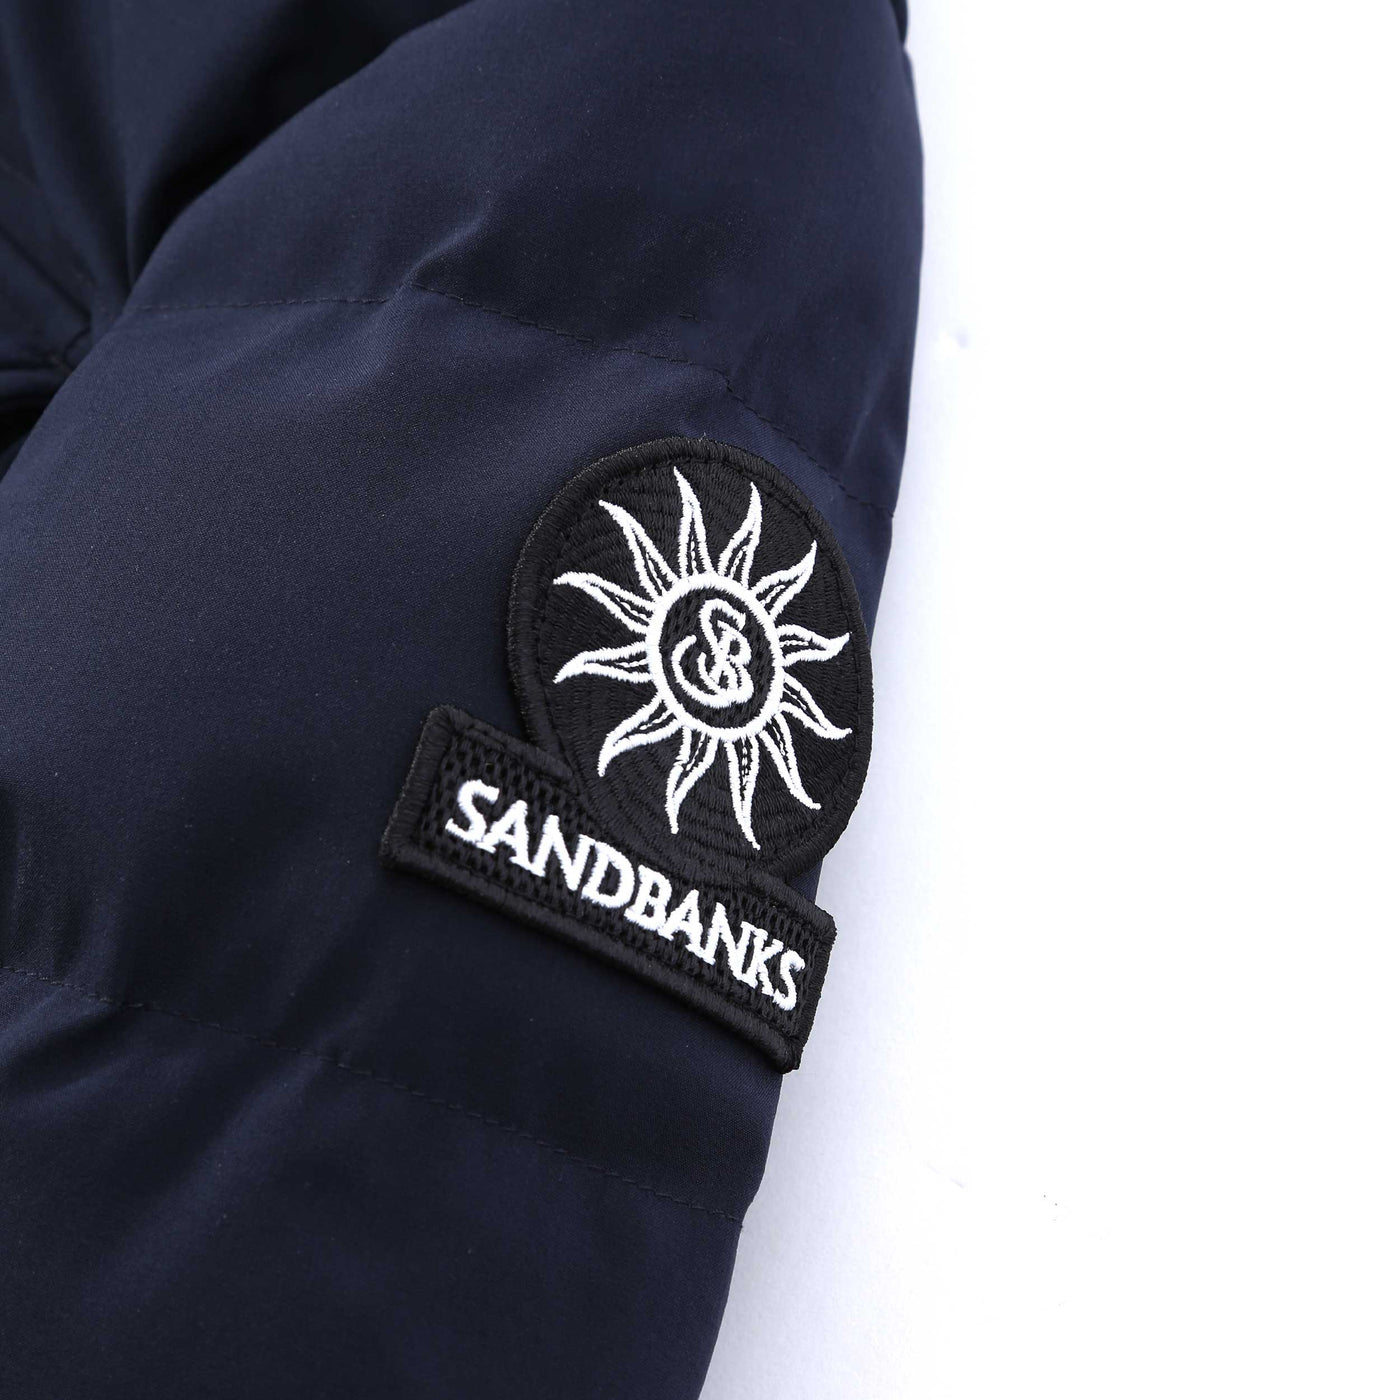 Sandbanks Branksome Long Puffer Jacket in Navy Logo